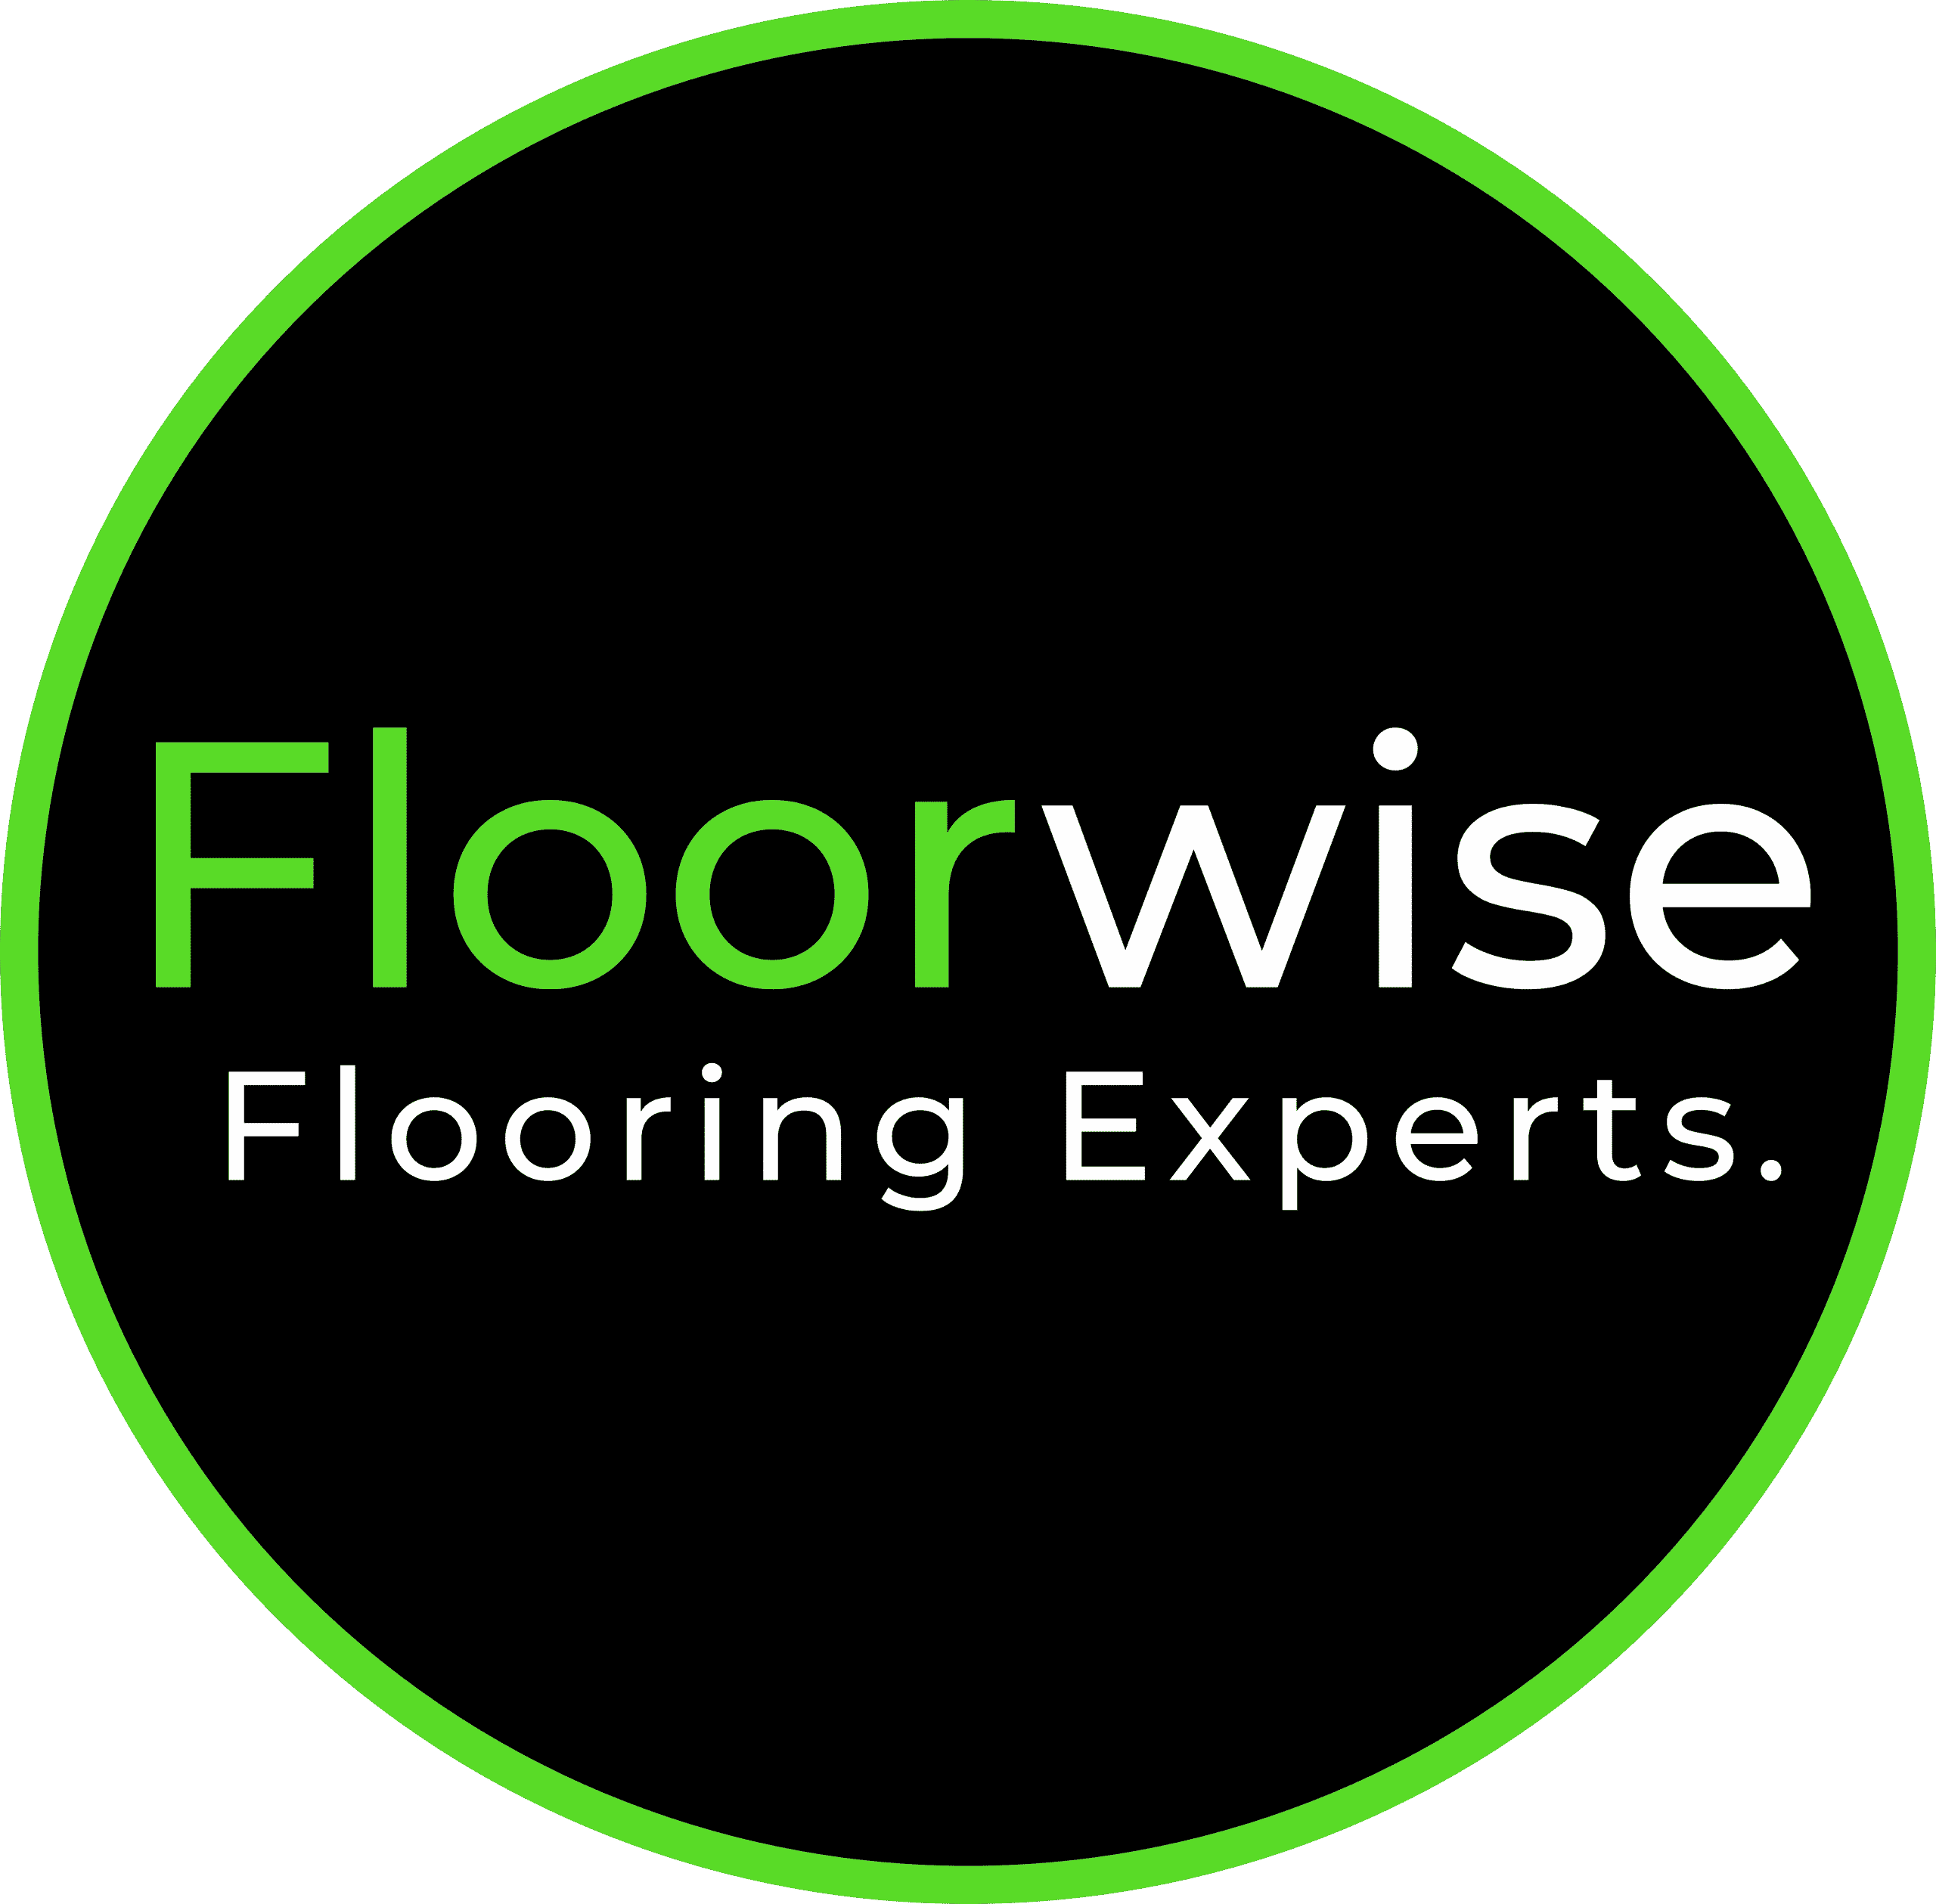 Floorwise Flooring Experts